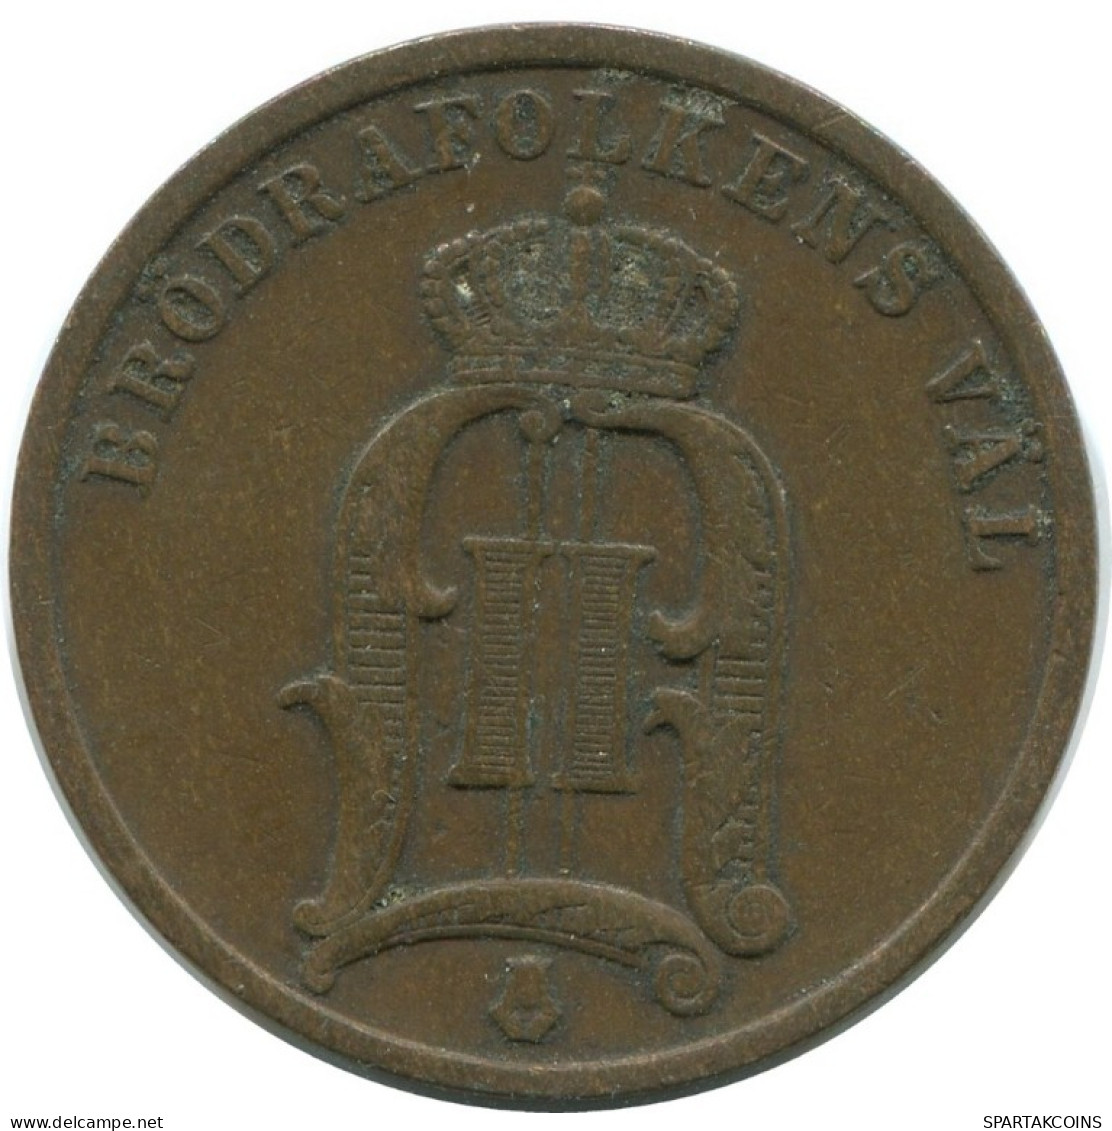 2 ORE 1900 SWEDEN Coin #AD018.2.U.A - Sweden